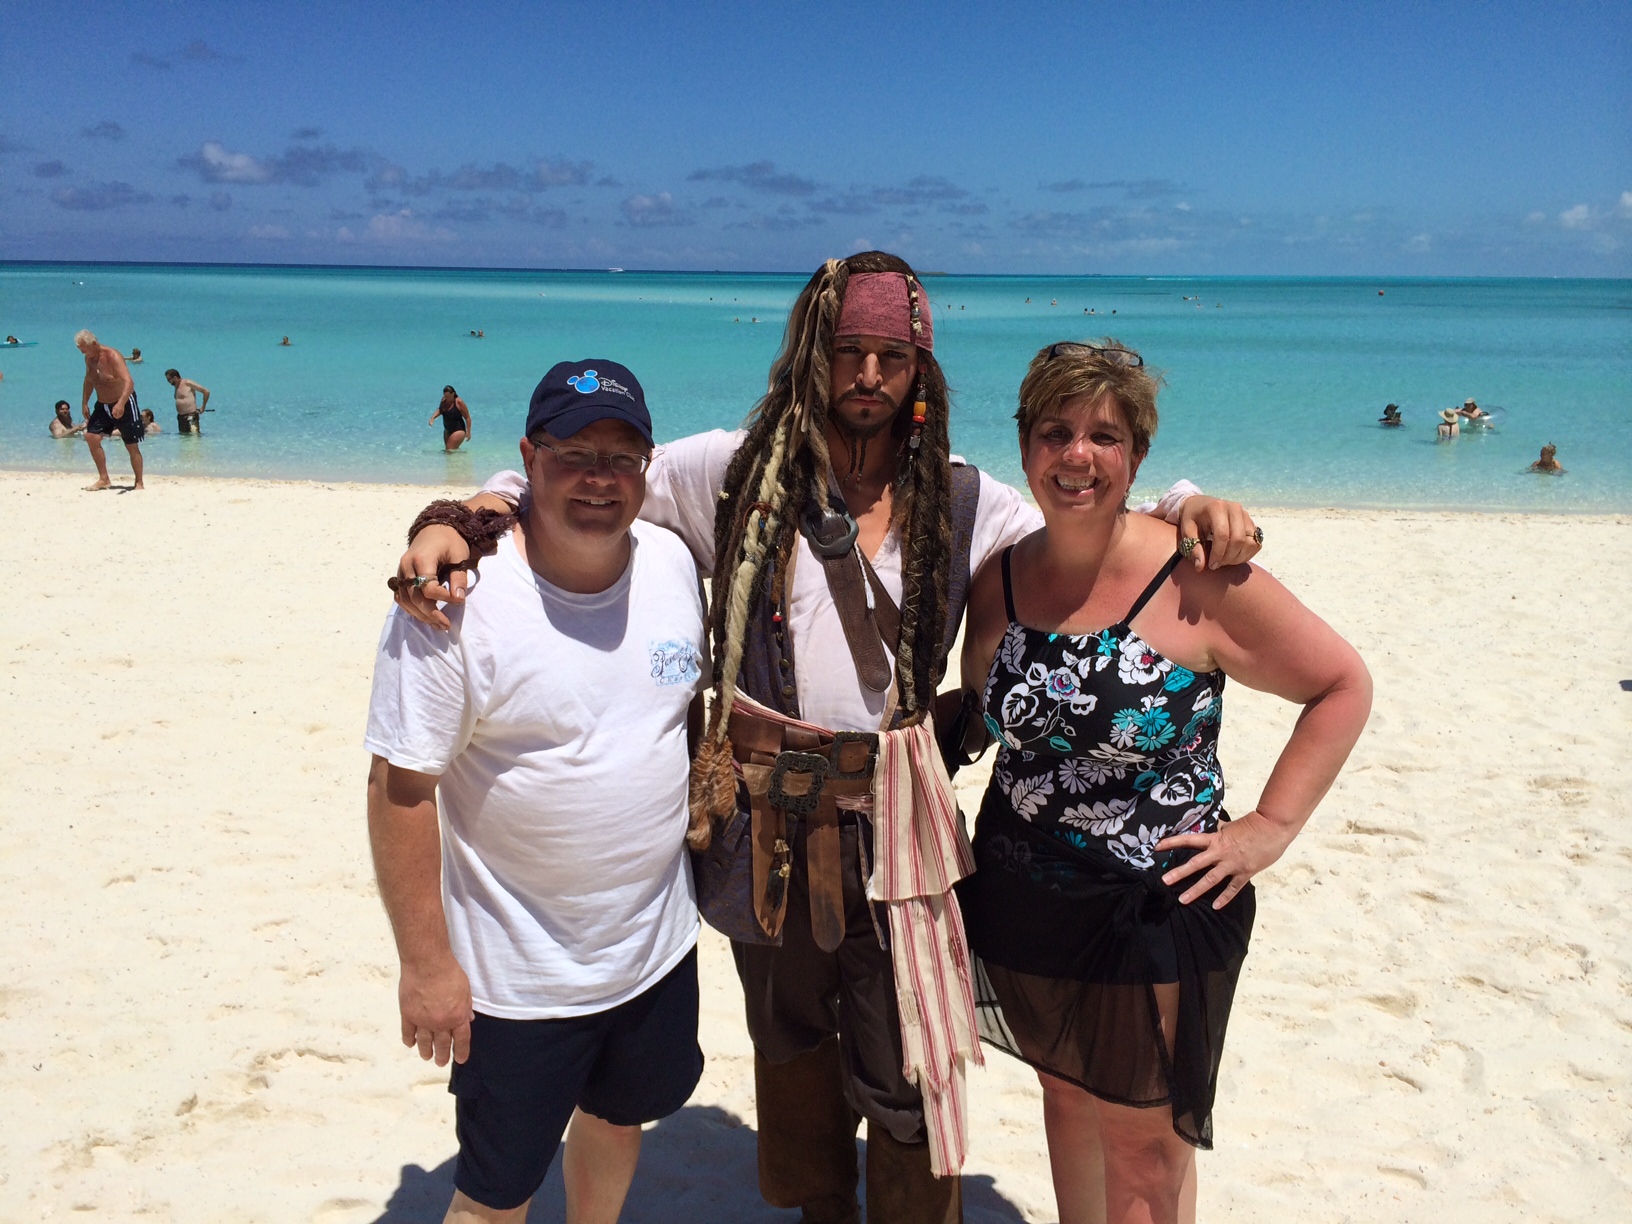 Captain Jack Sparrow at Castaway Cay